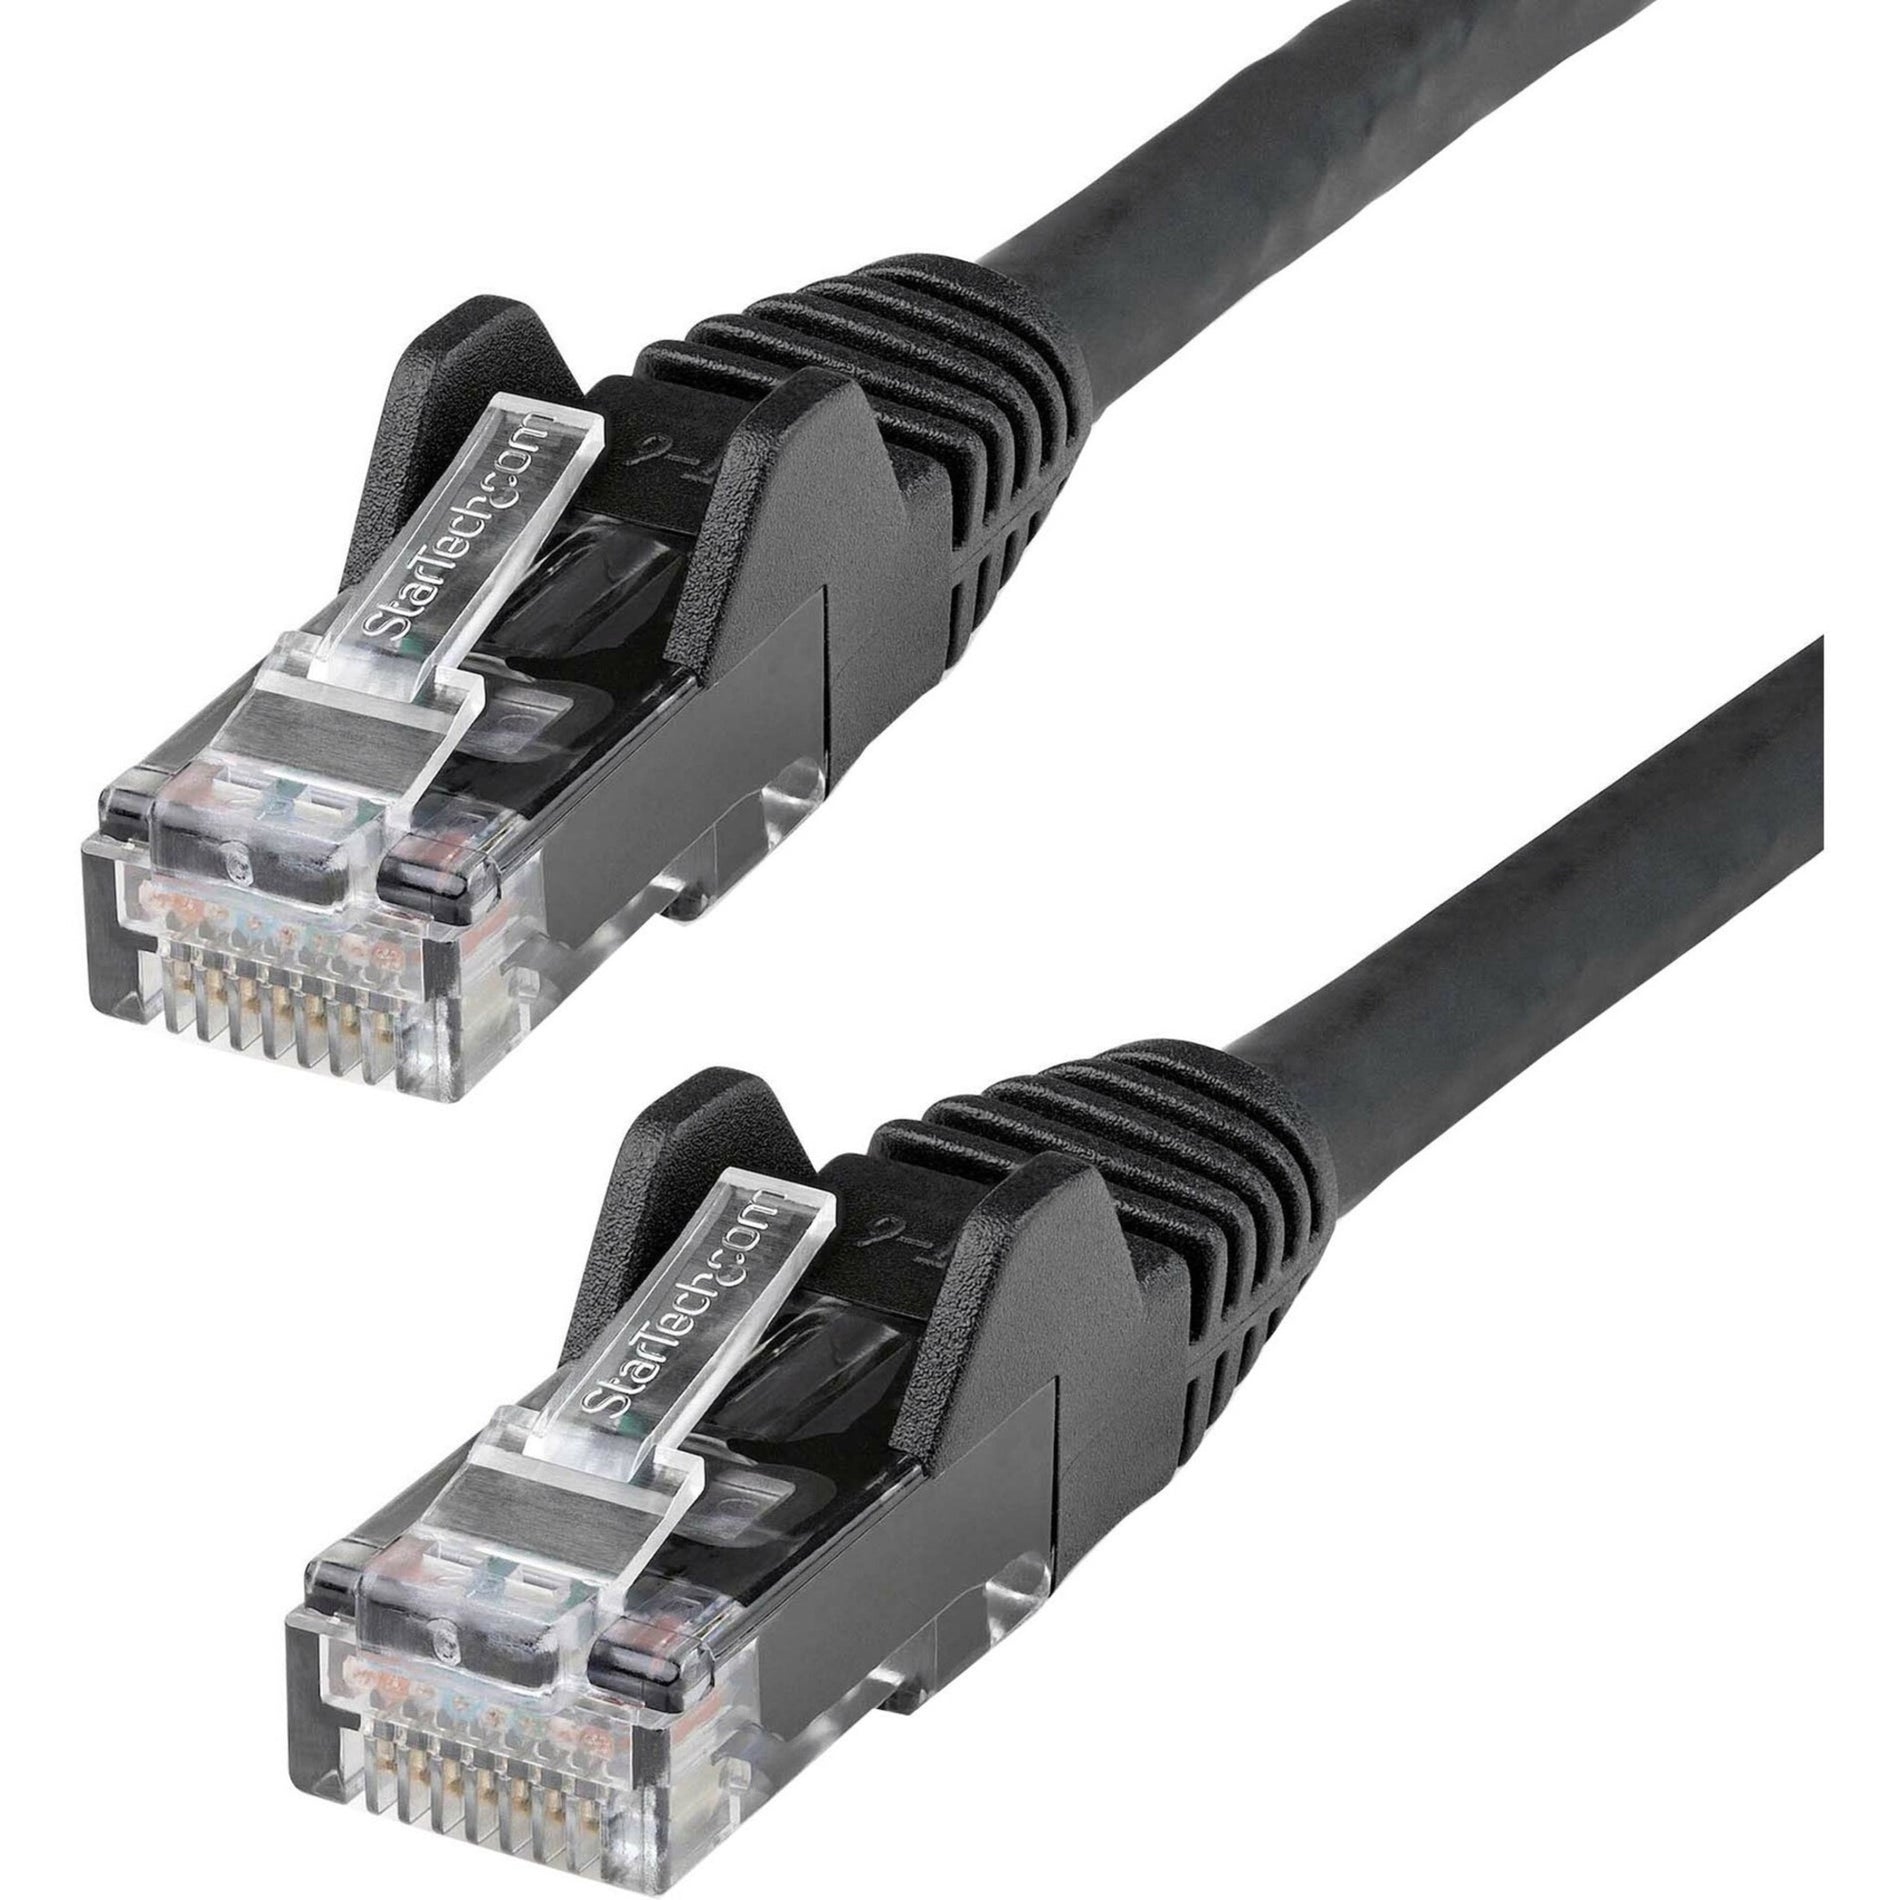 StarTech.com N6PATCH35BK 35 ft Black Snagless Cat6 UTP Patch Cable, Lifetime Warranty, 10 Gbit/s Data Transfer Rate, RJ45 Connector Clip Protectors